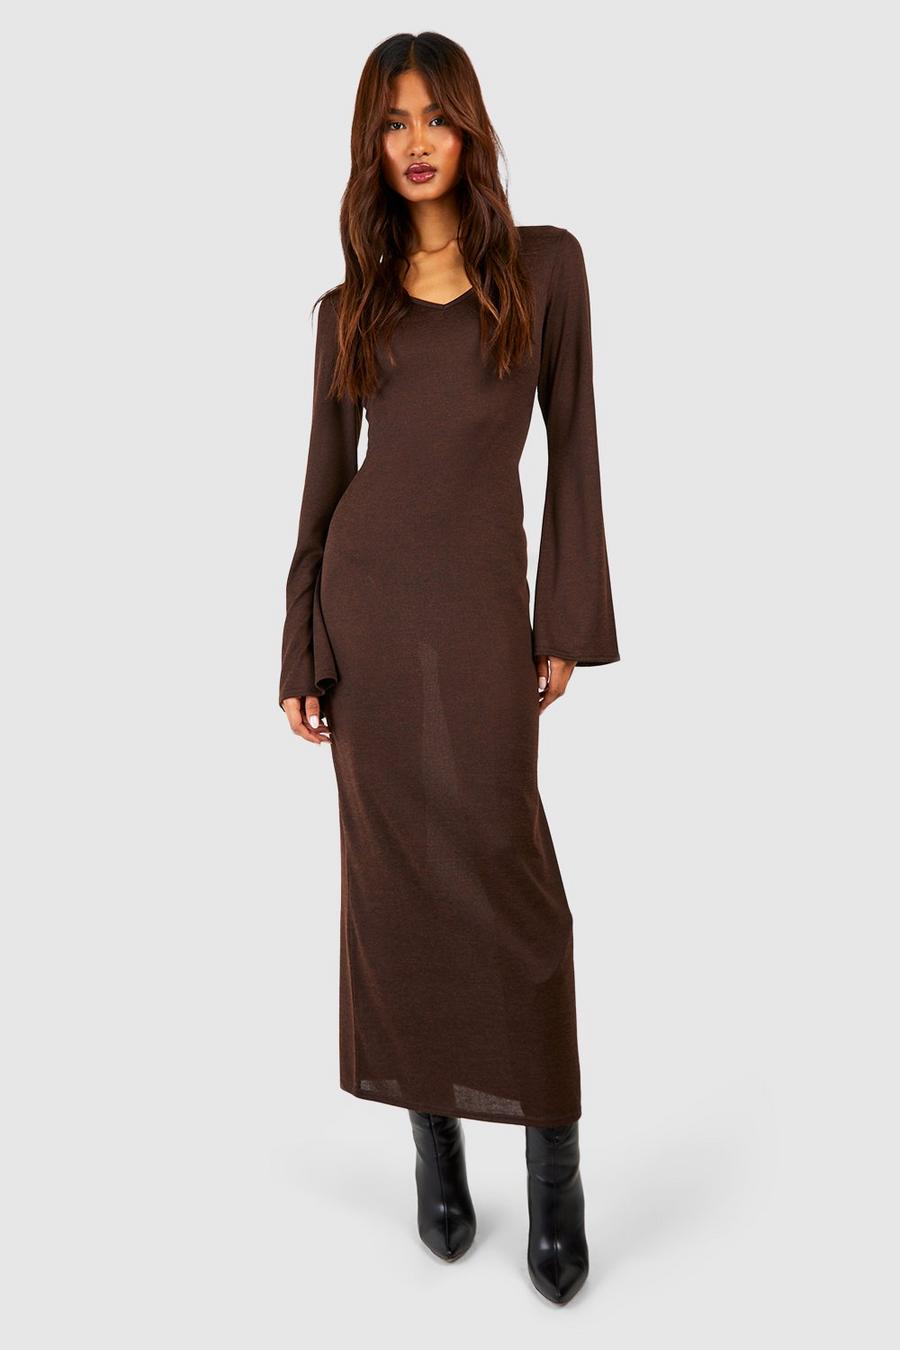 Chocolate Tall Lightweight Knitted V Neck Flare Sleev Midi Dress